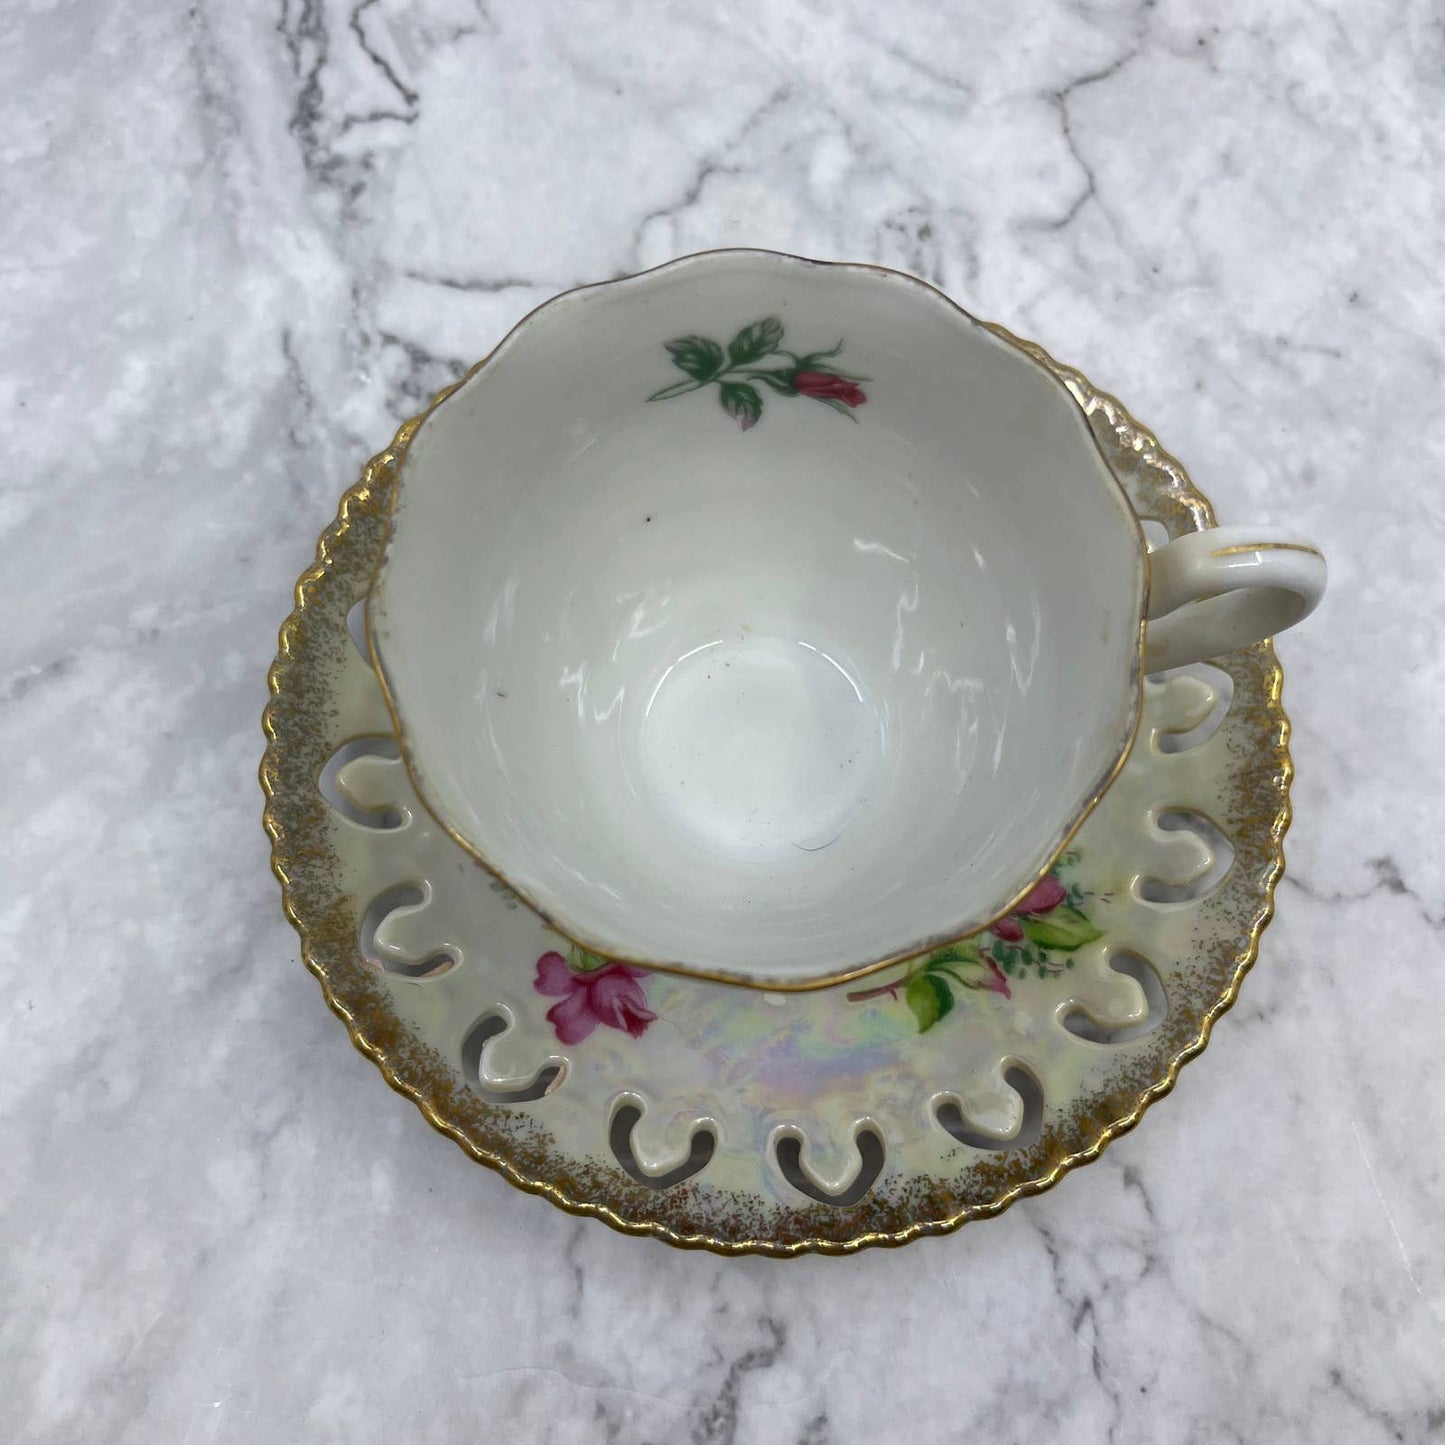 Vintage Norcrest Fine China Tea Cup and Saucer Set Pink Roses TA1